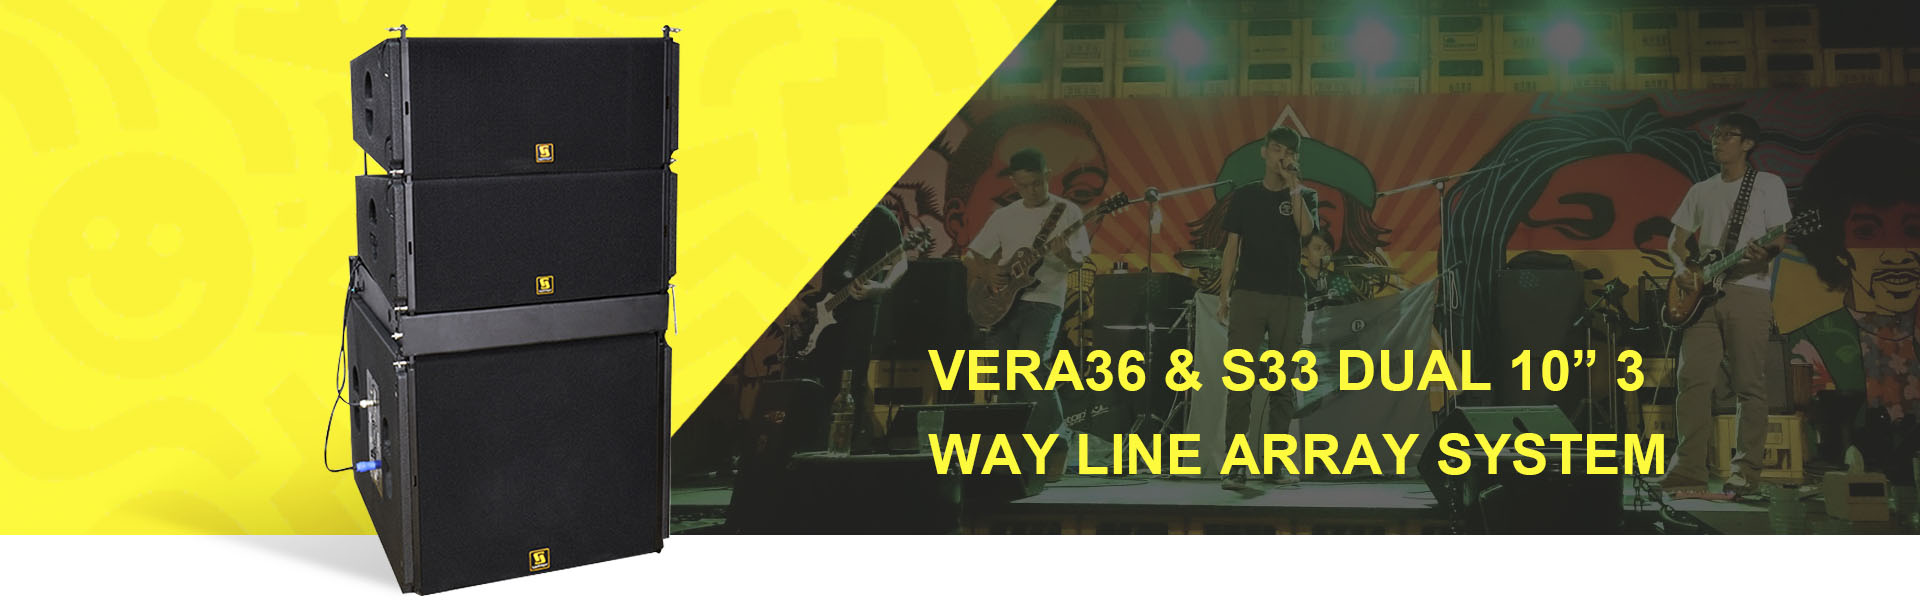 Vera36&S33 Dual 10'' 3 Way Line Array System banner b1